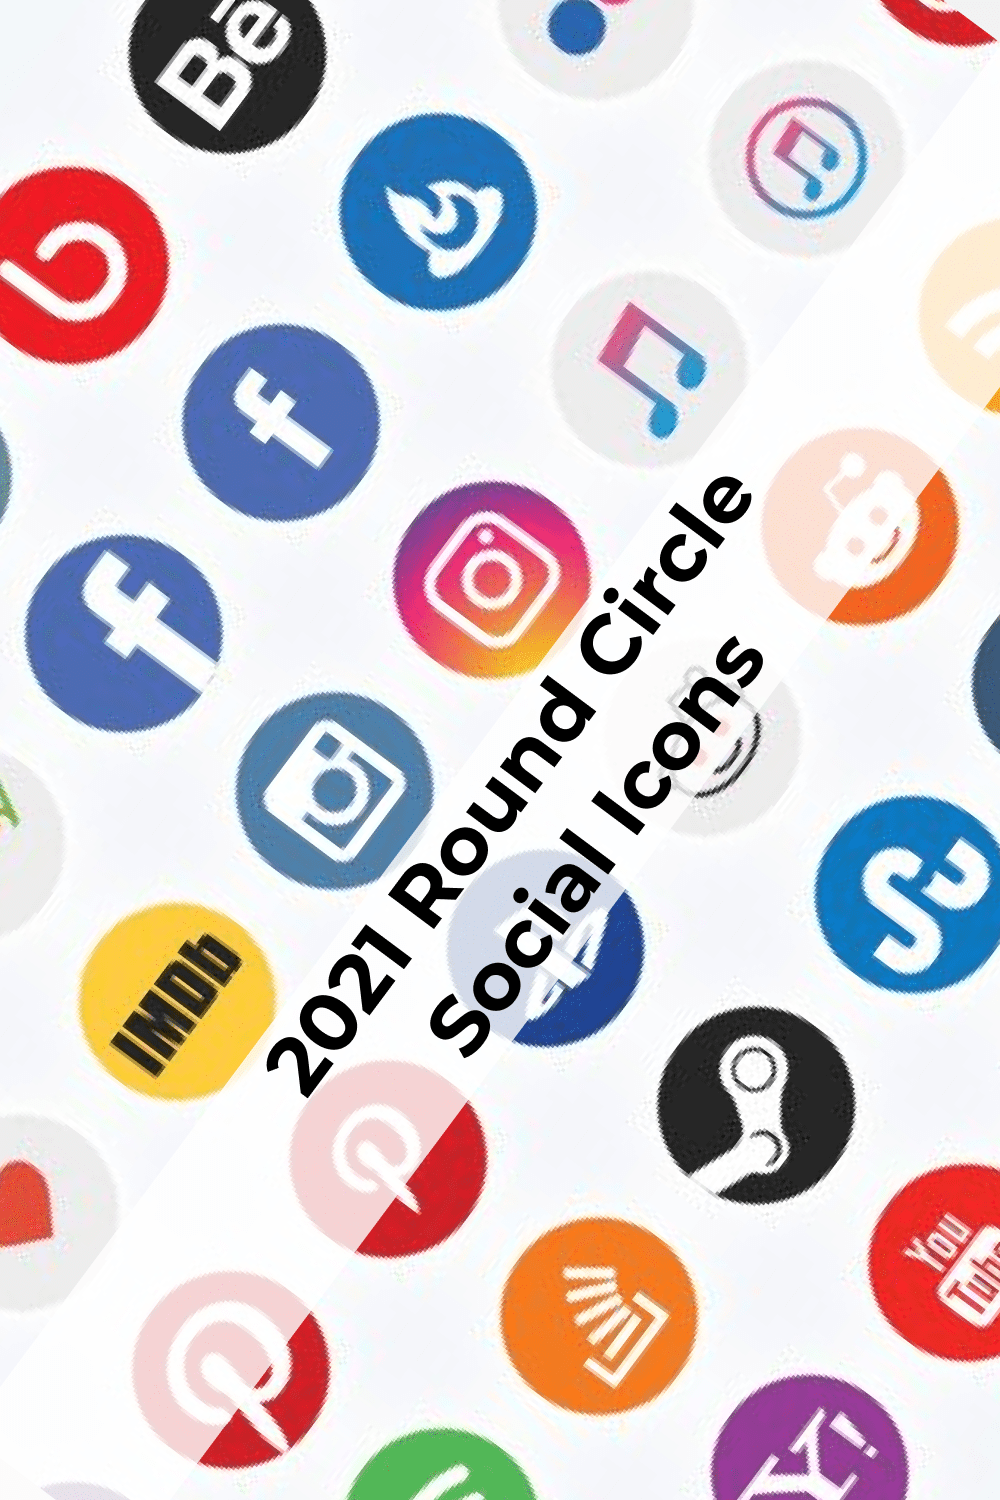 Light Round Circle Social Icons.